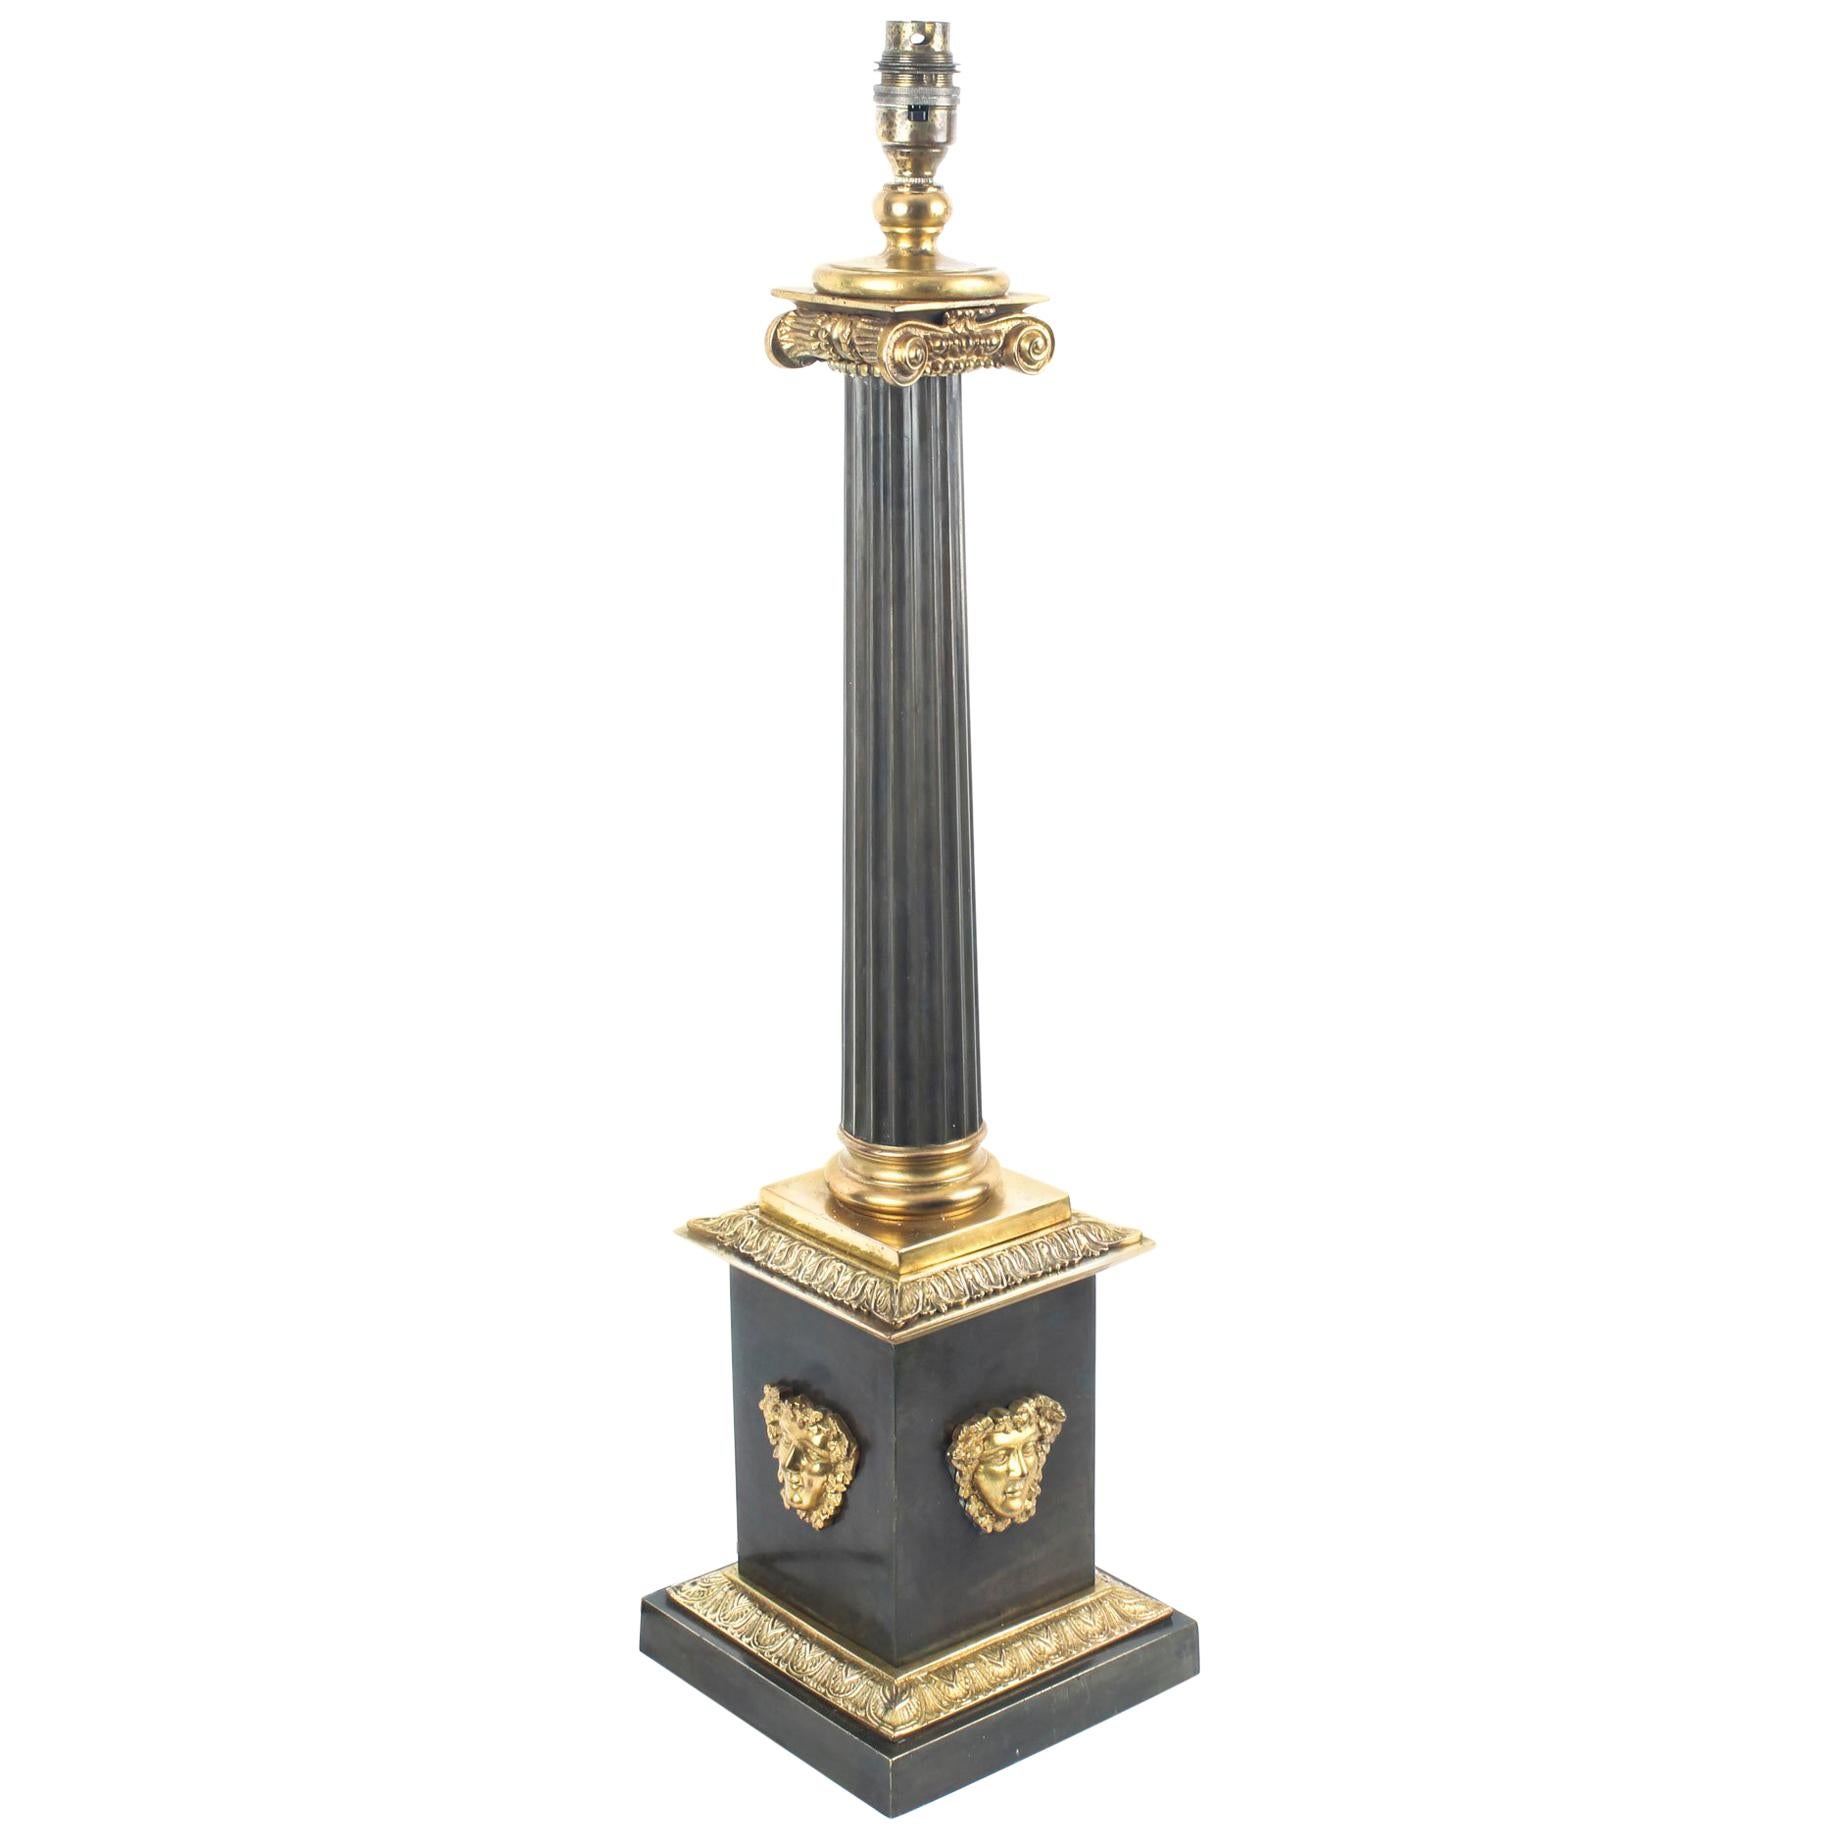 Antique French Empire Period Corinthian Column Table Lamp, 19th Century